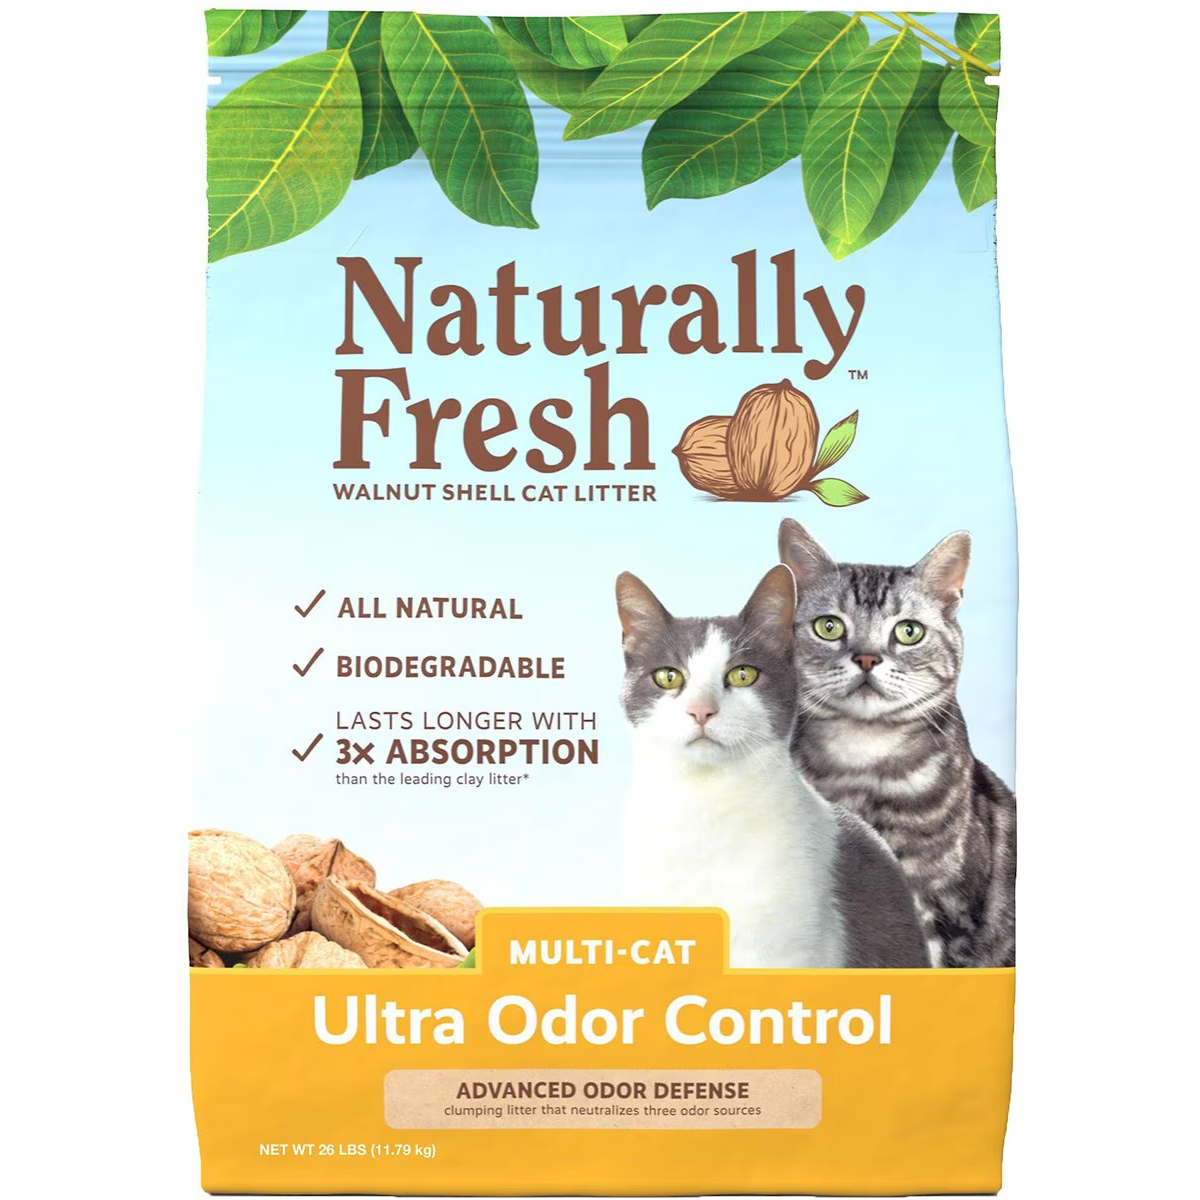 Naturally Fresh Multi-Cat Fresh Unscented Clumping Walnut Cat Litter New